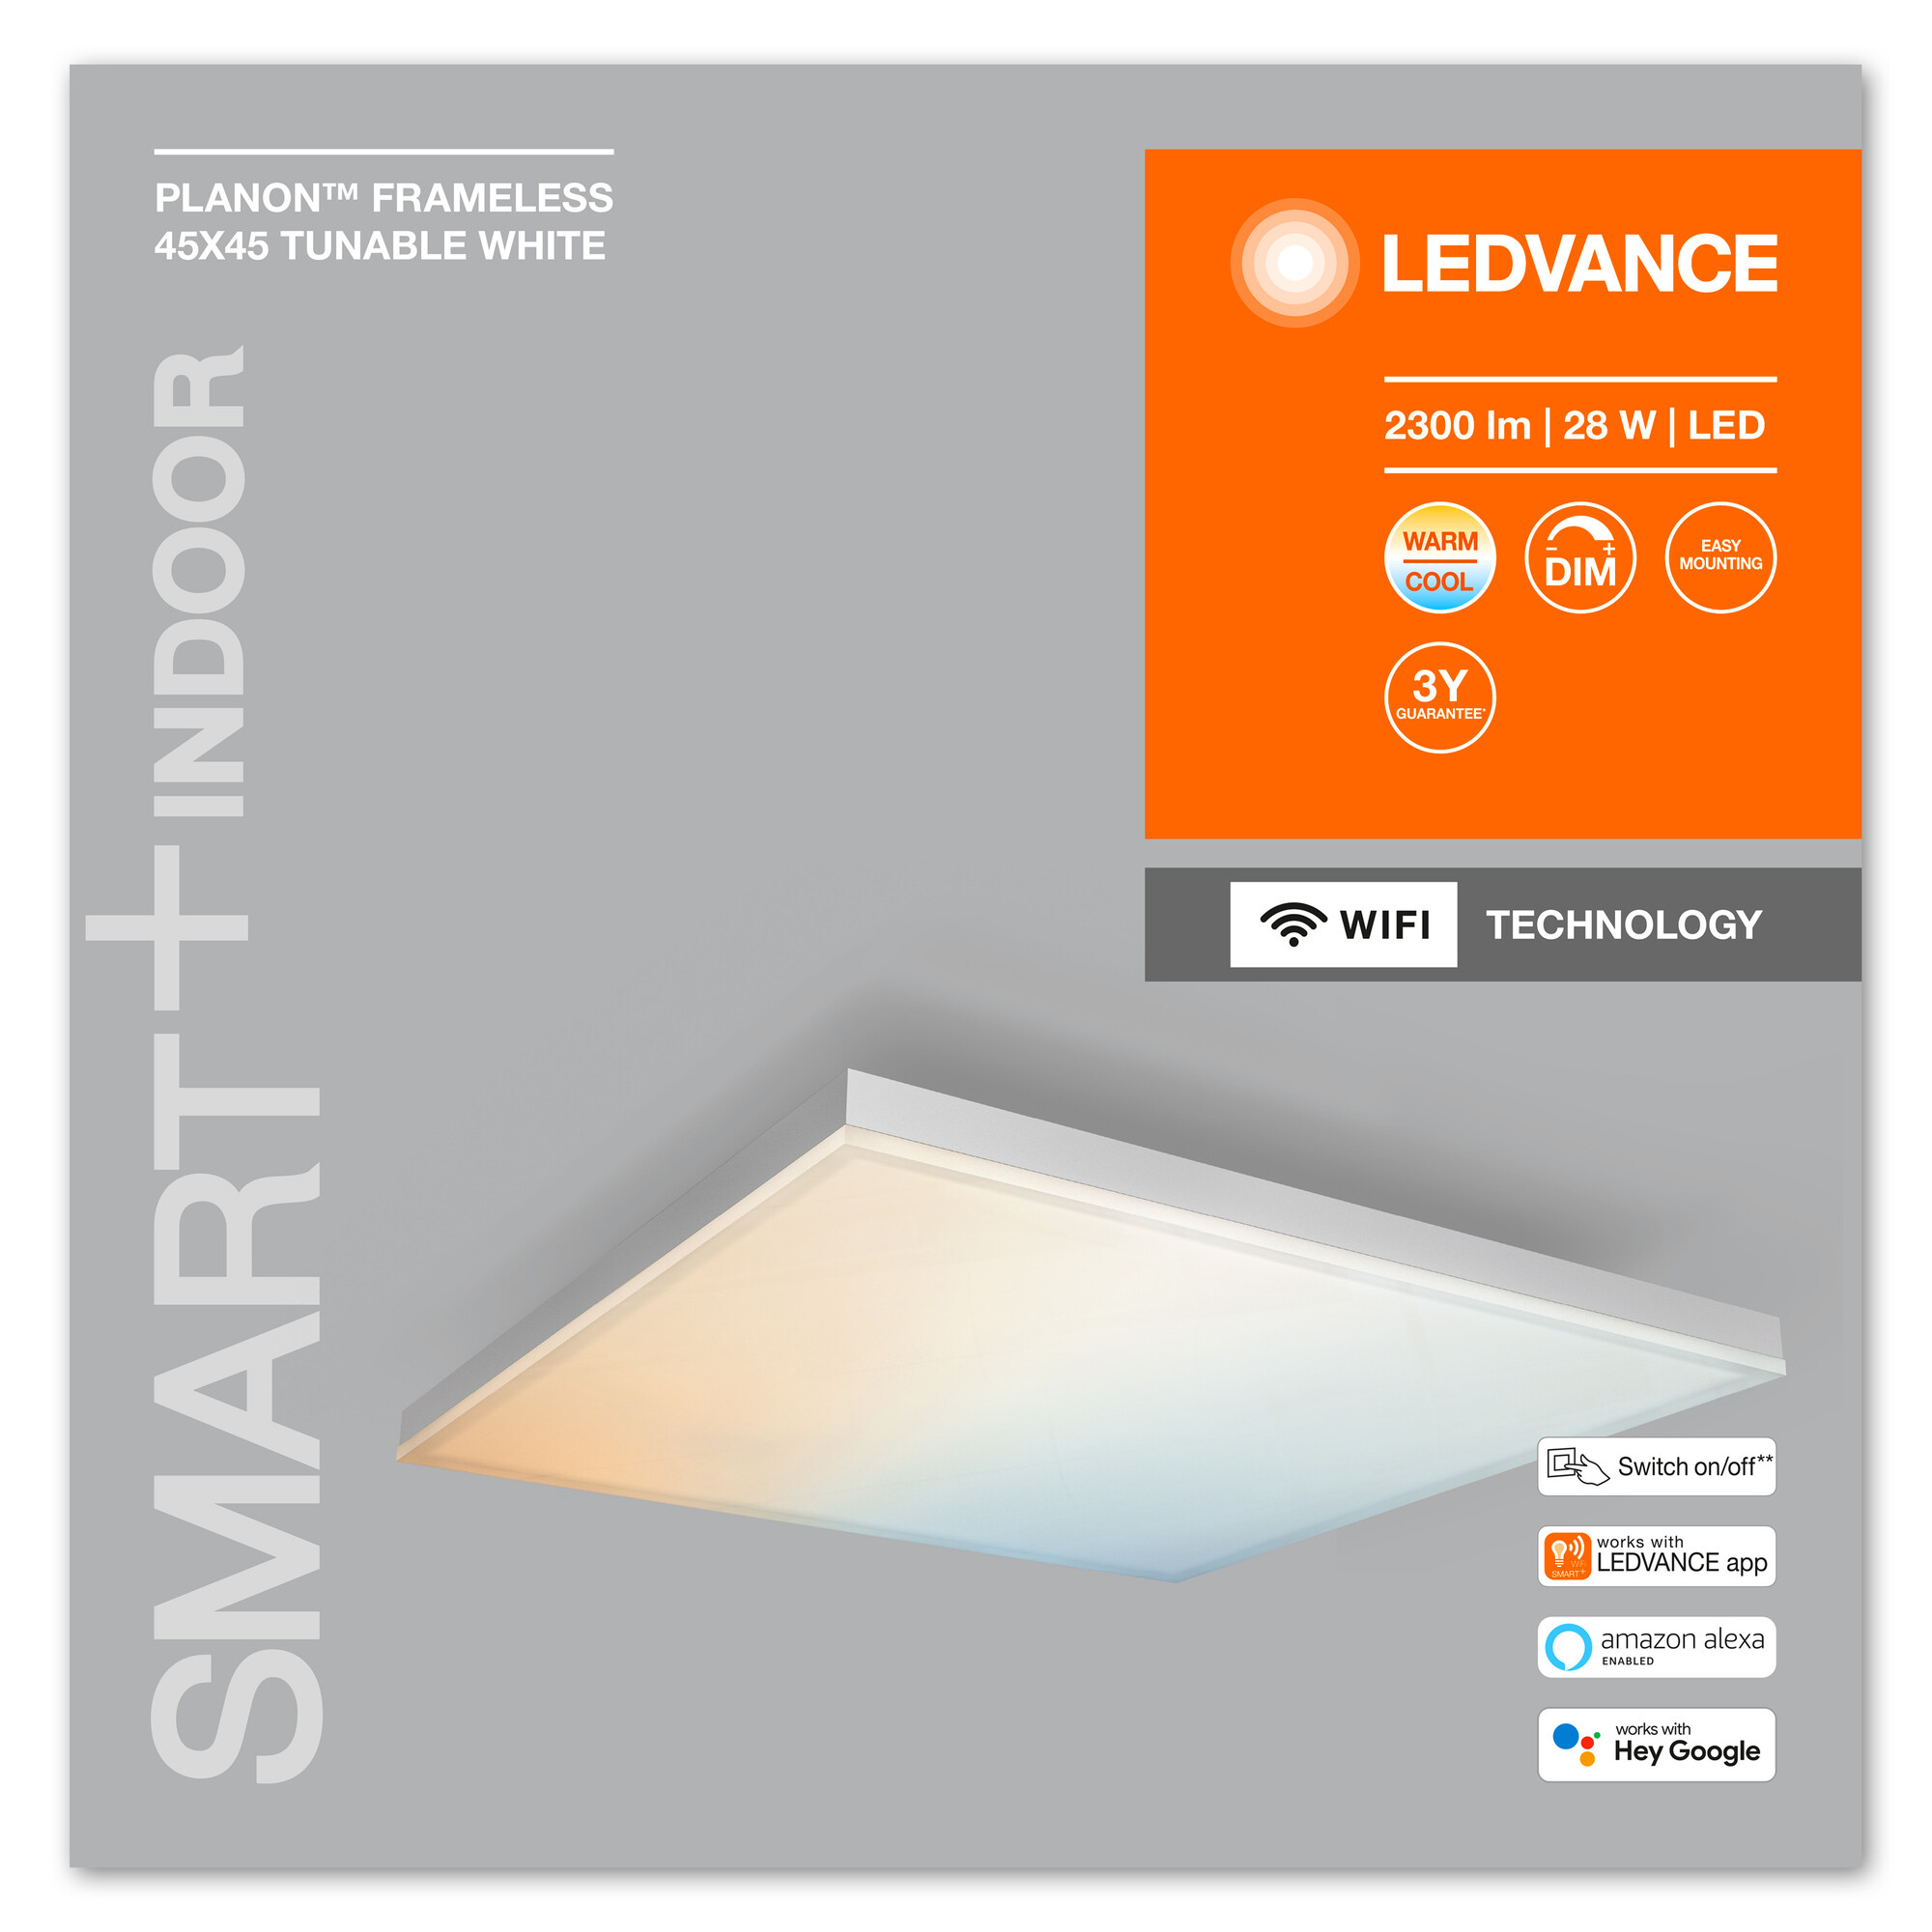 LED-Panelleuchte 'Planon' weiß 45 x 45 cm 2300 lm + product picture